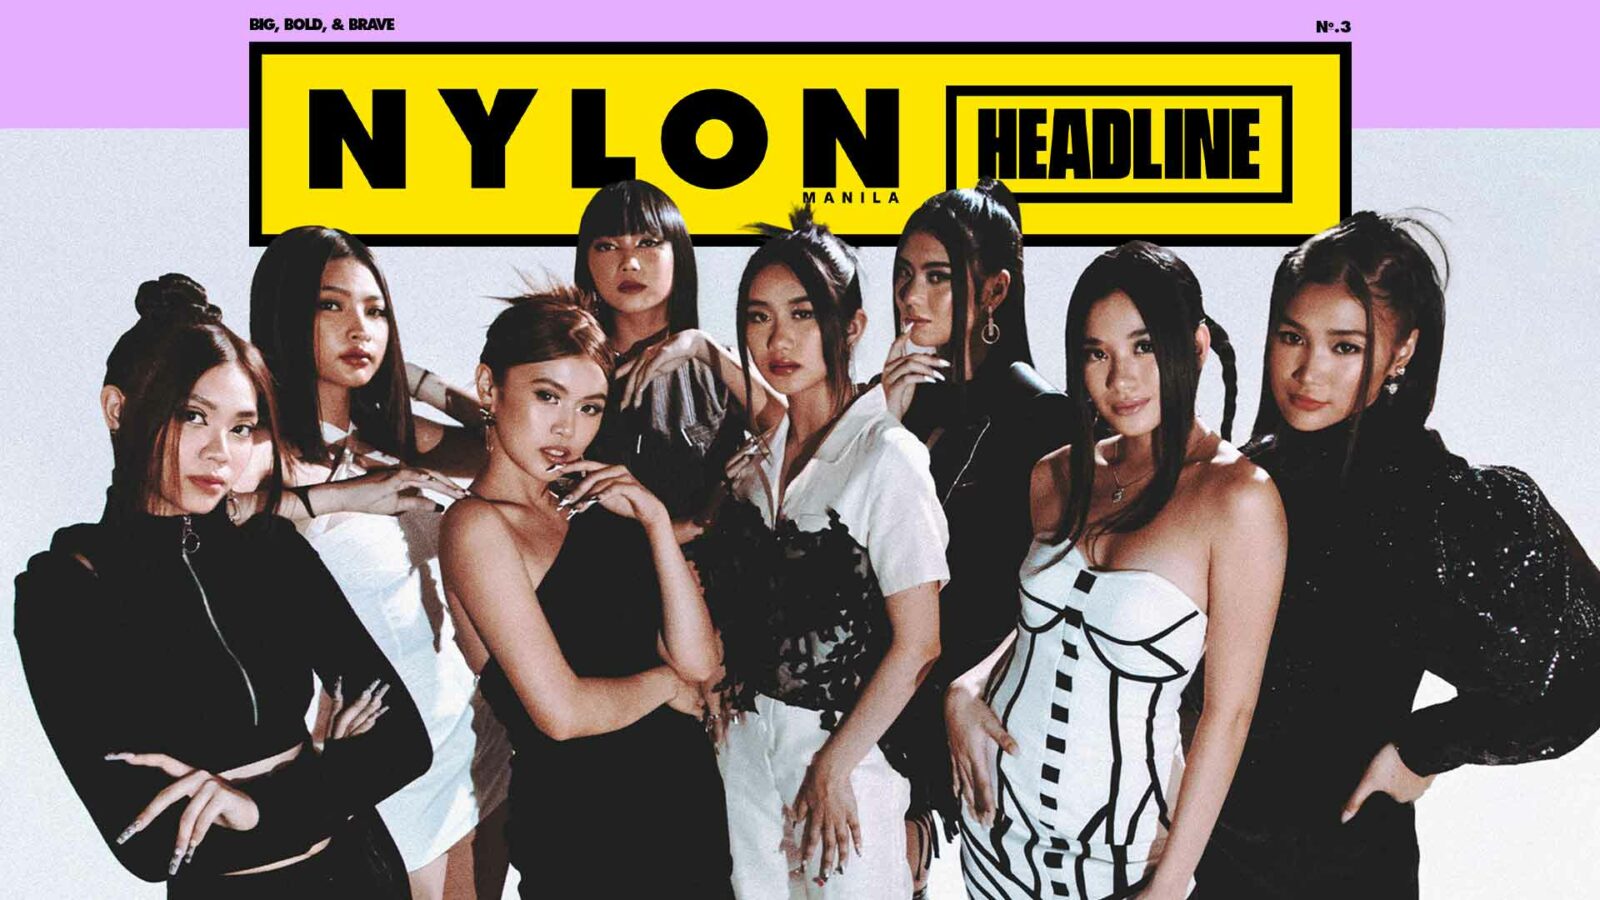 BINI Cover NYLON Manila Headline